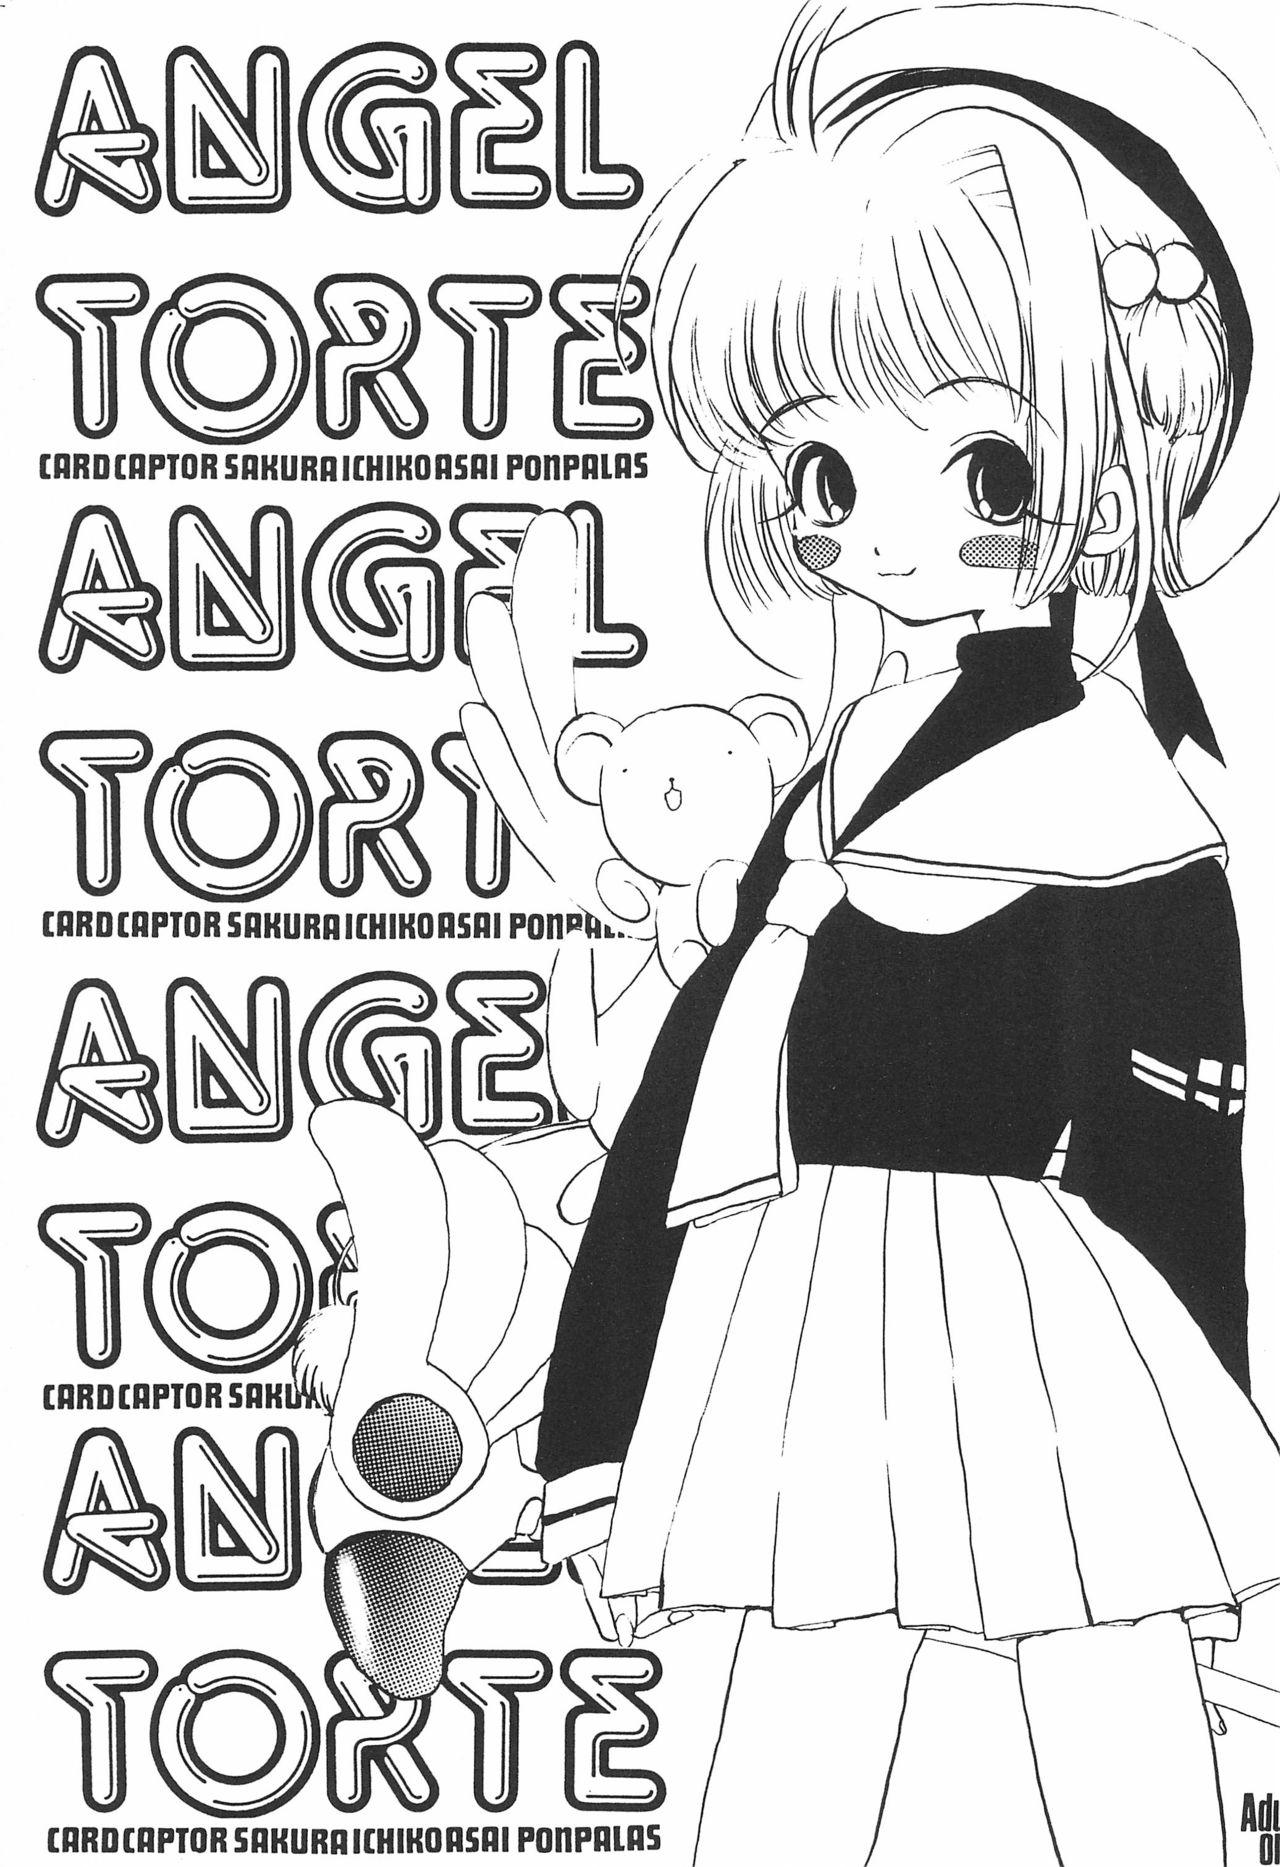 Sologirl ANGEL TORTE - Cardcaptor sakura Kiss - Page 5